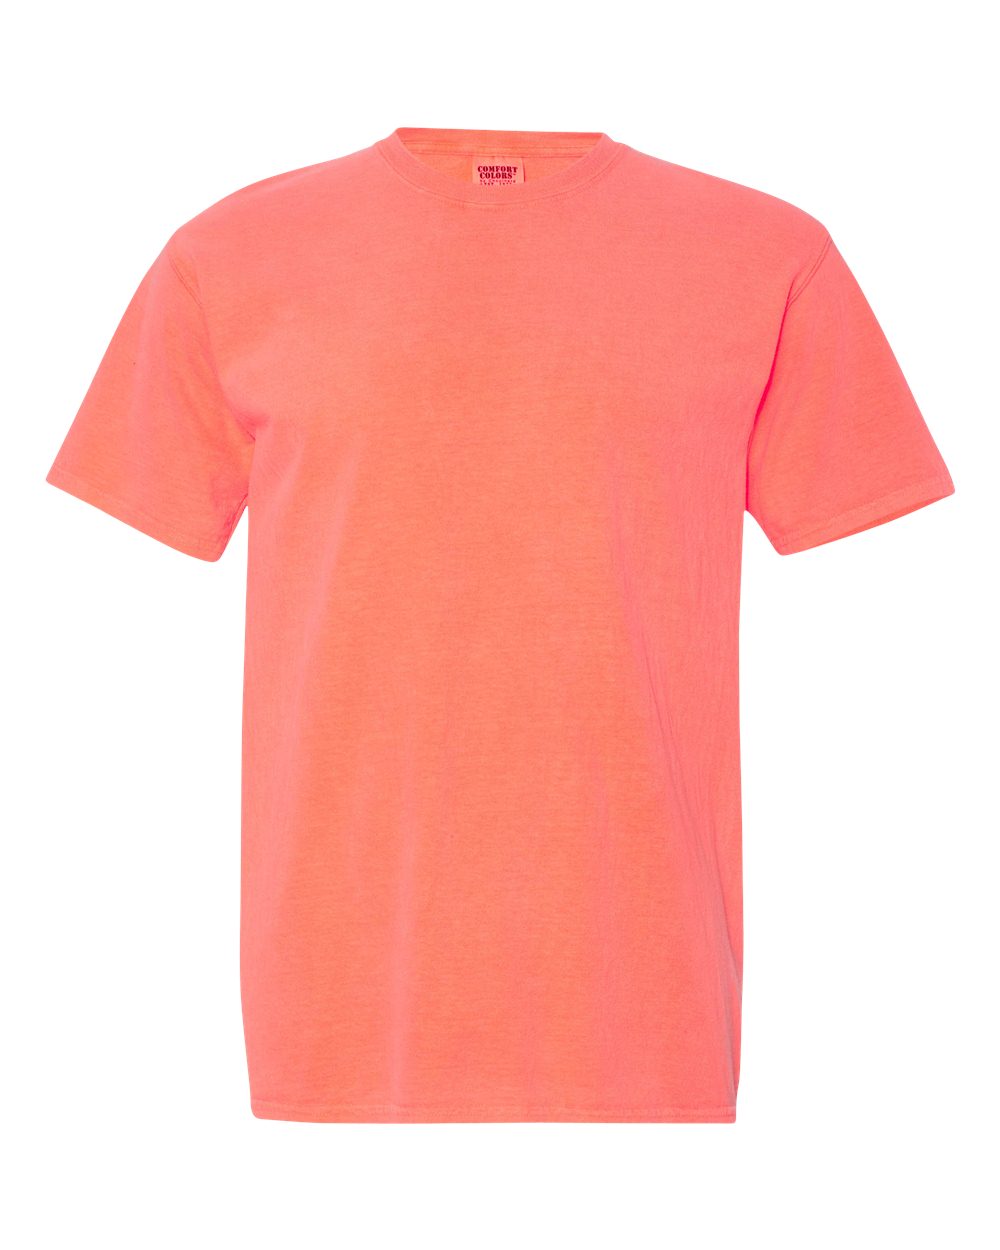 Comfort Colors Garment-Dyed Tee (1717) in Neon Red Orange